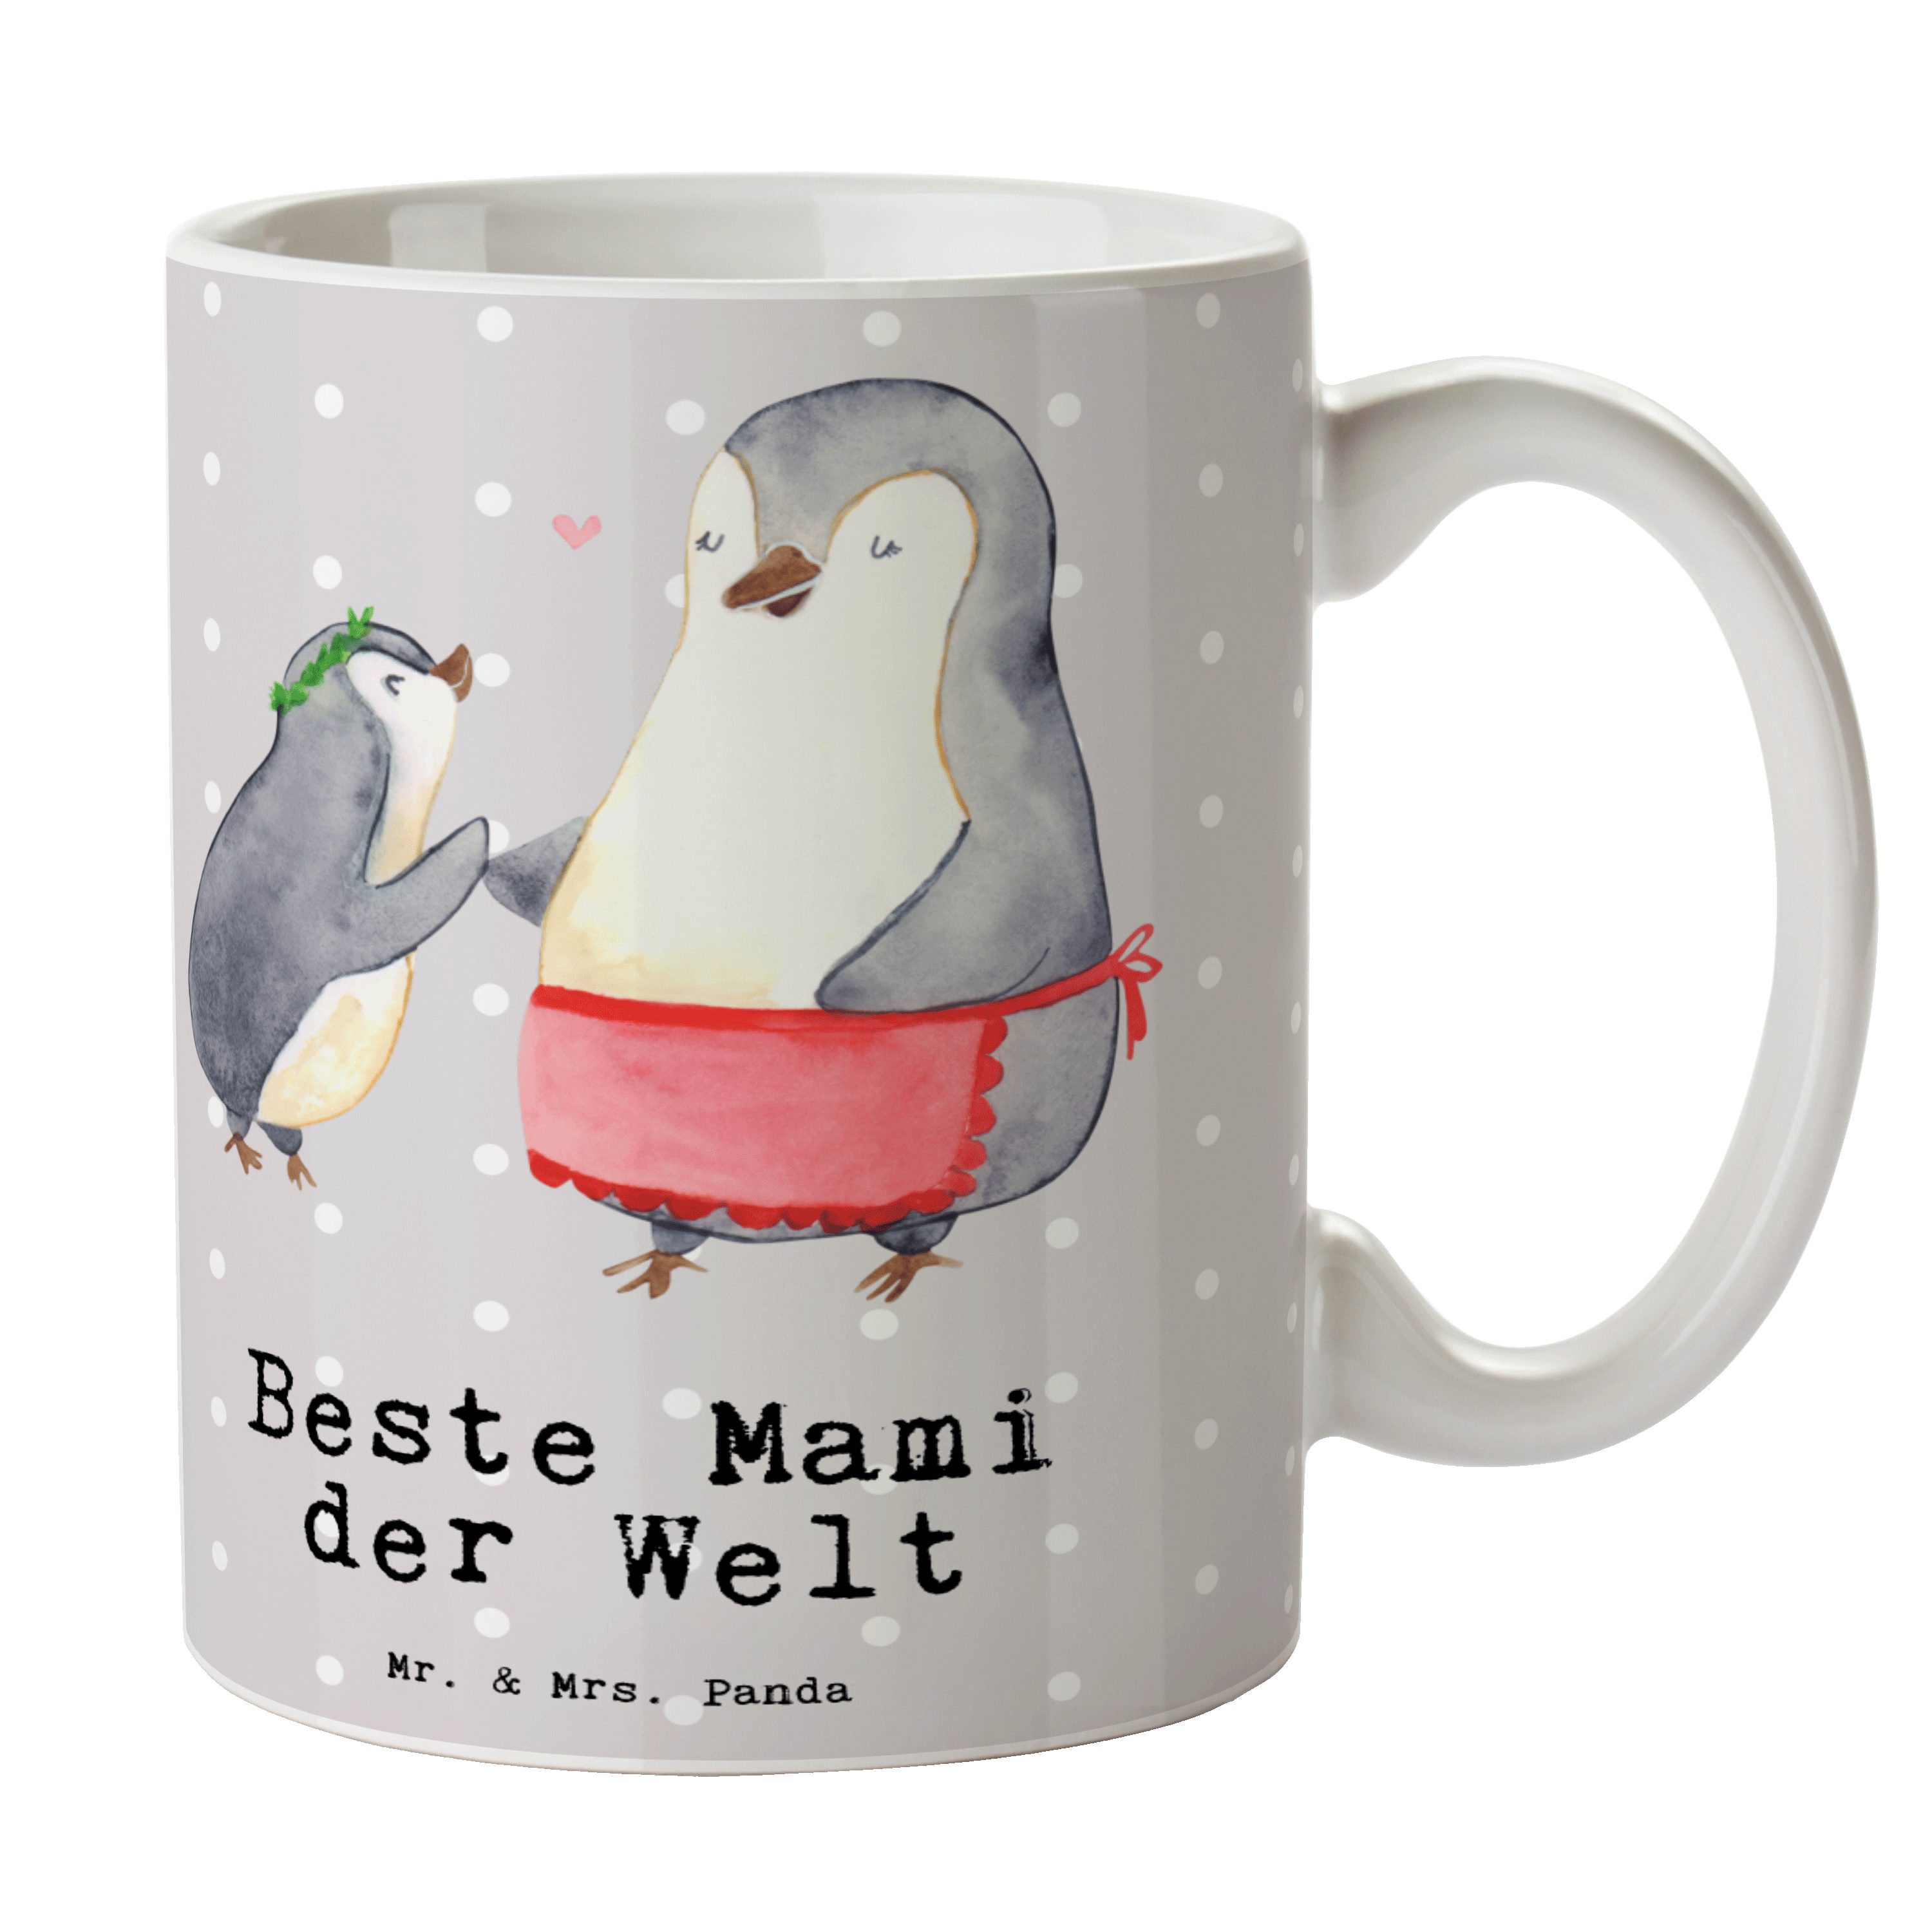 Mr. & Mrs. Panda Tasse Keramik - - Welt Pinguin der Pastell Keramiktasse, Grau Geschenk, Mami Beste